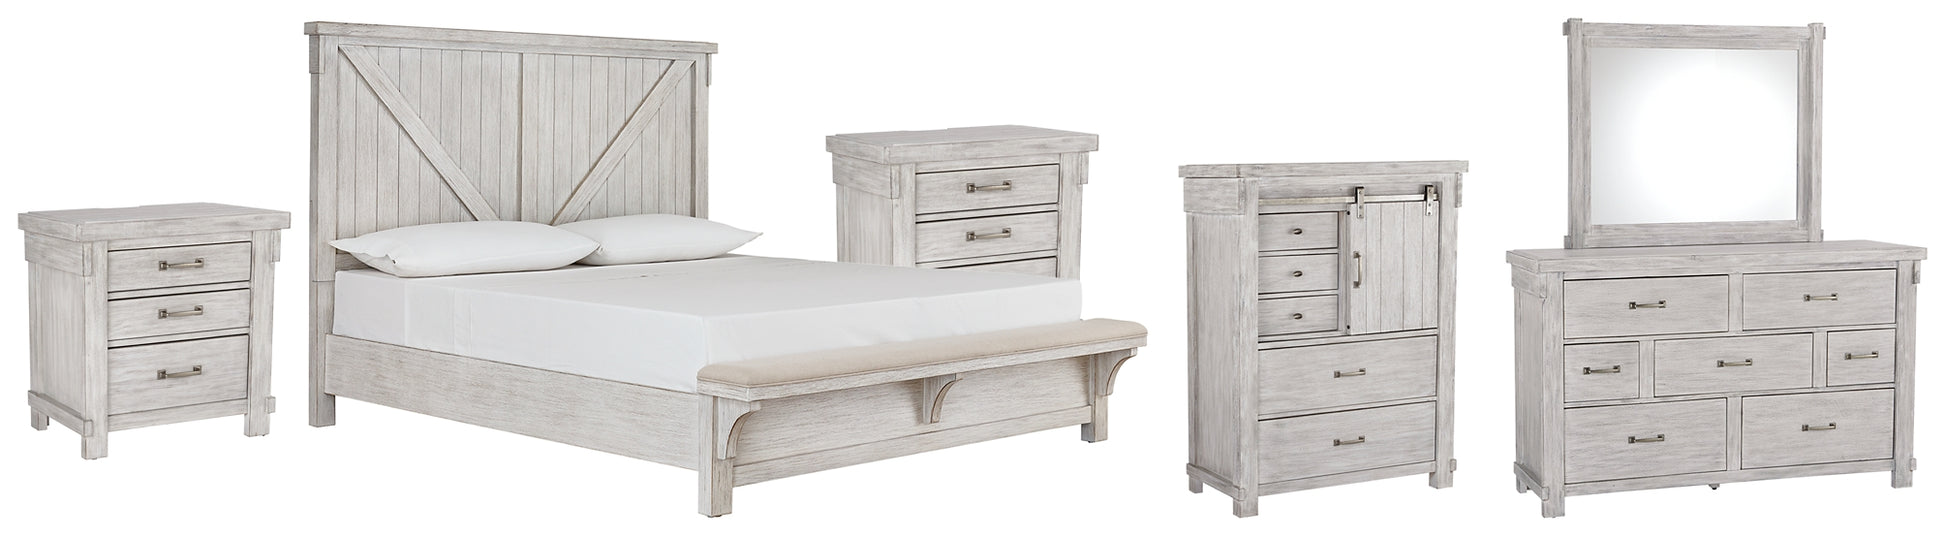 Brashland Queen Panel Bed with Mirrored Dresser, Chest and 2 Nightstands Wilson Furniture (OH)  in Bridgeport, Ohio. Serving Bridgeport, Yorkville, Bellaire, & Avondale